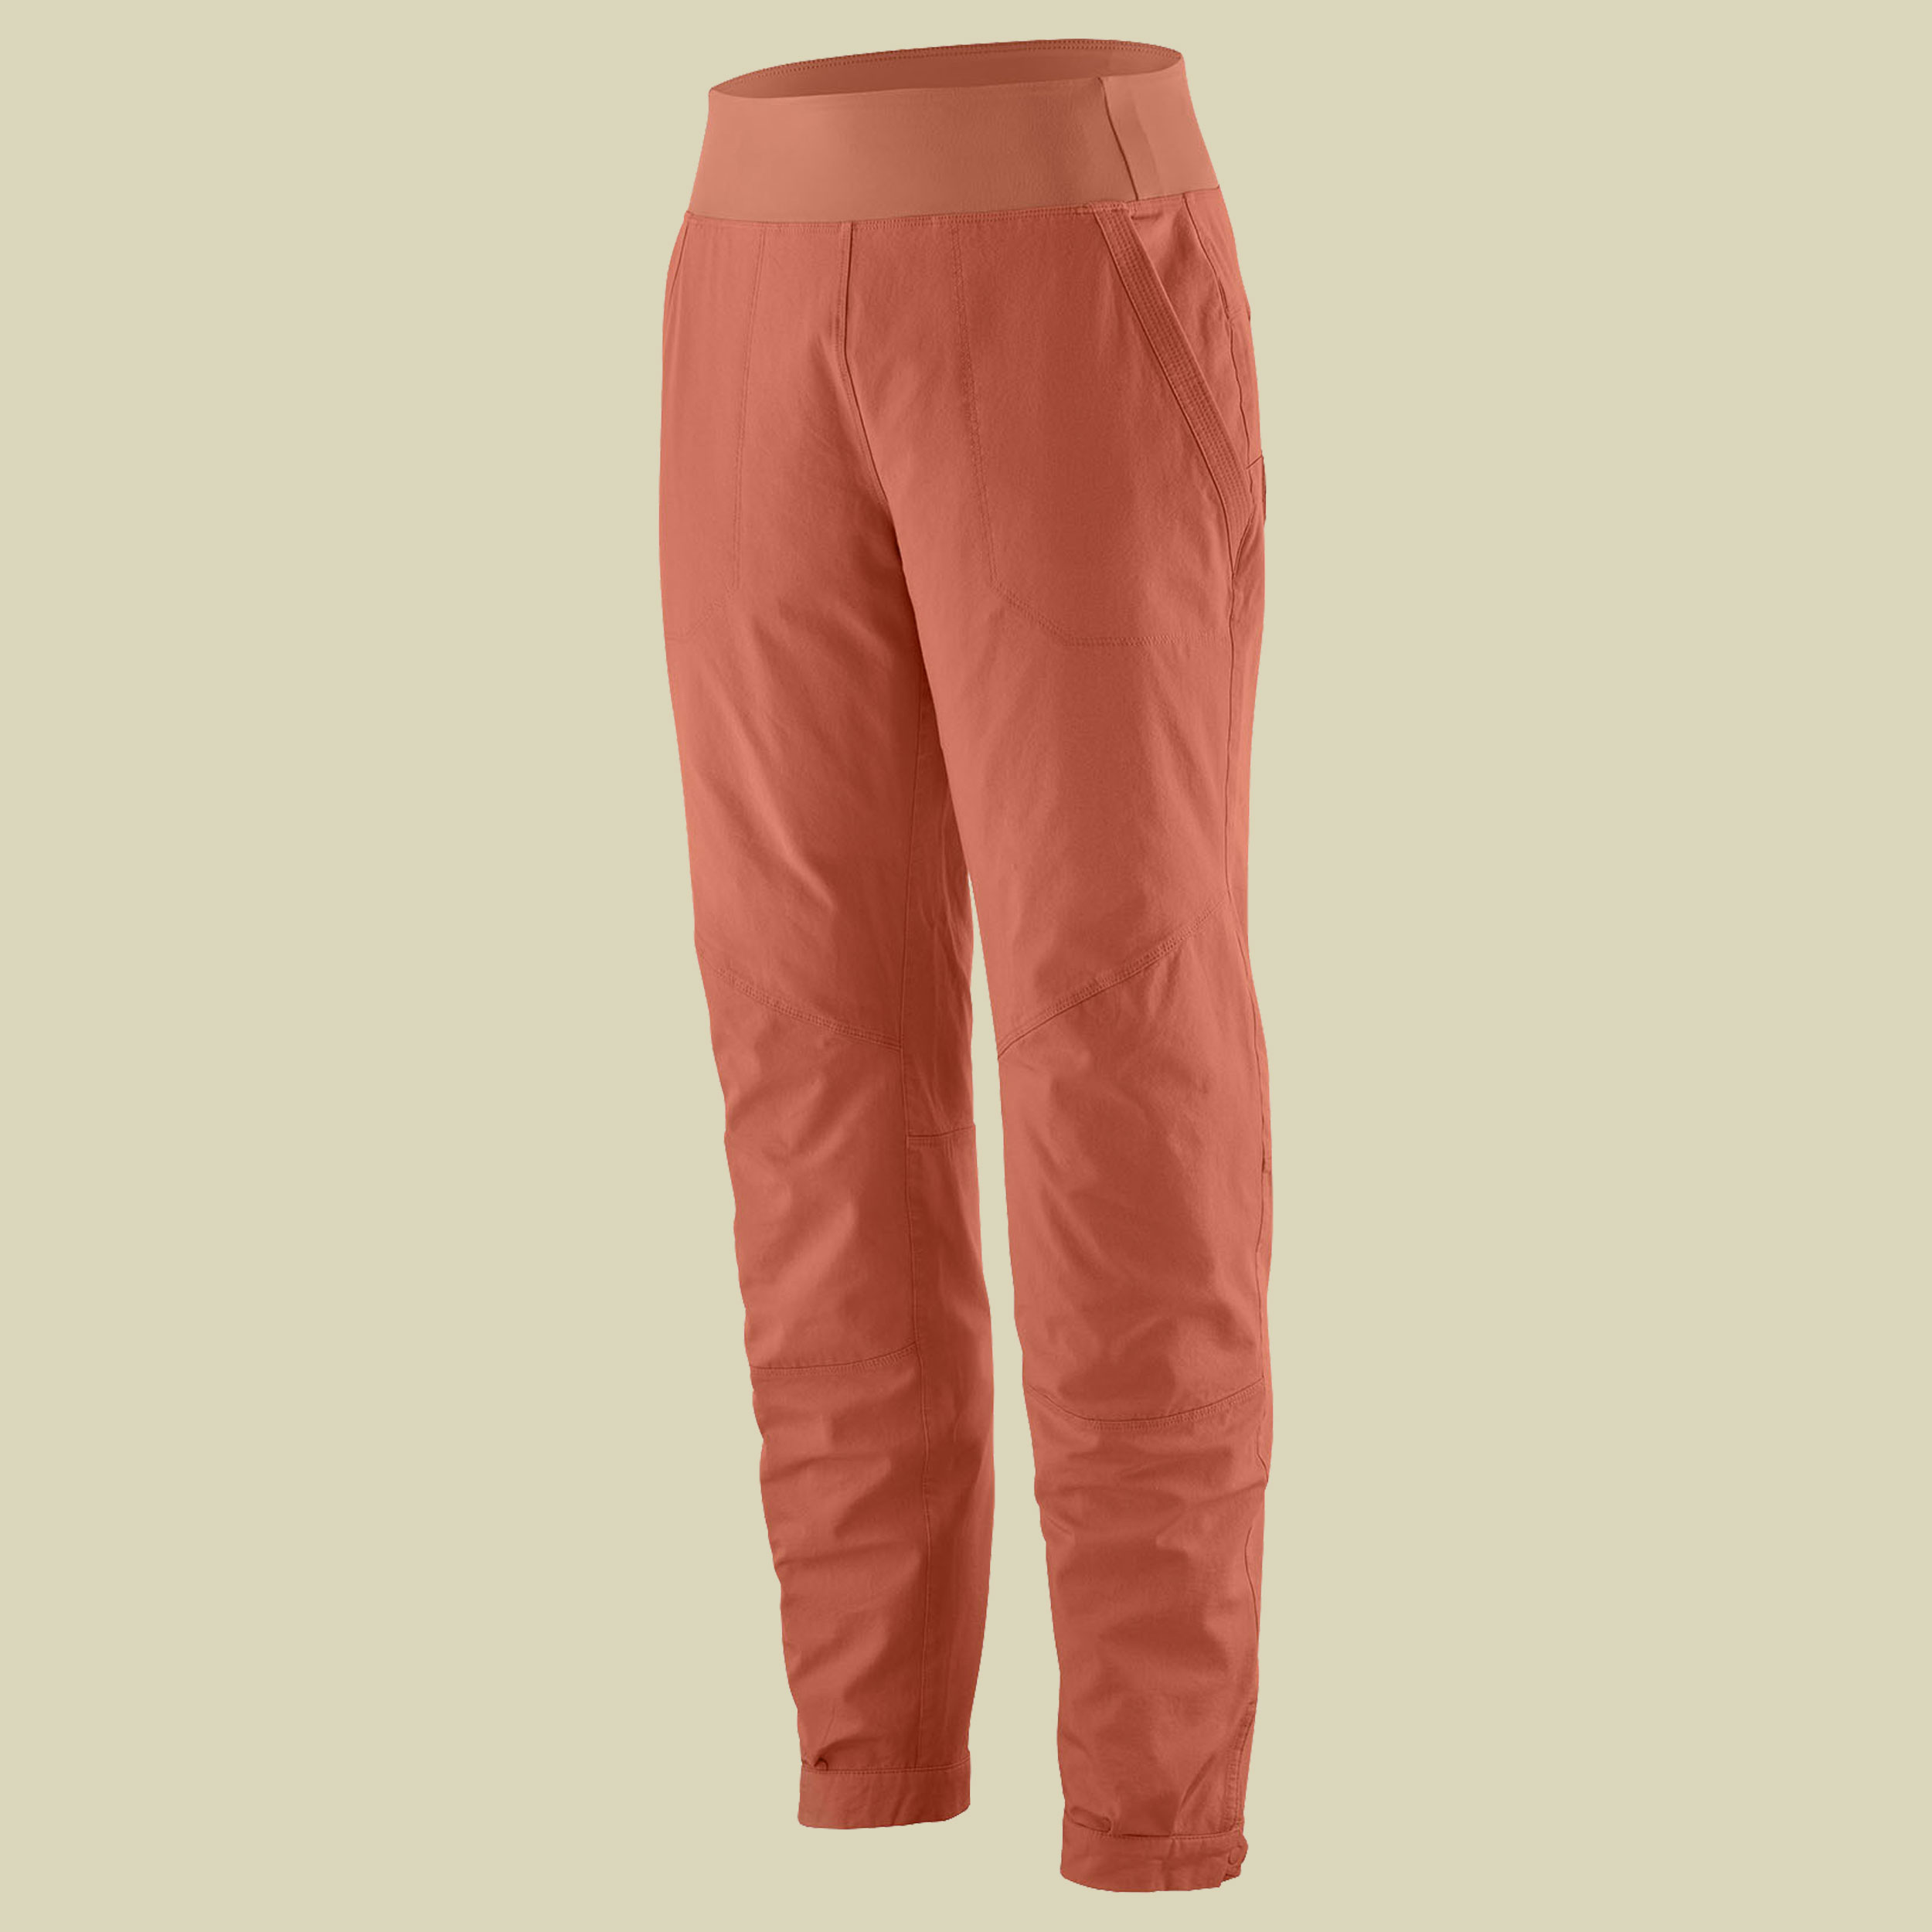 Caliza Rock Pants Women orange 10 - sienna clay